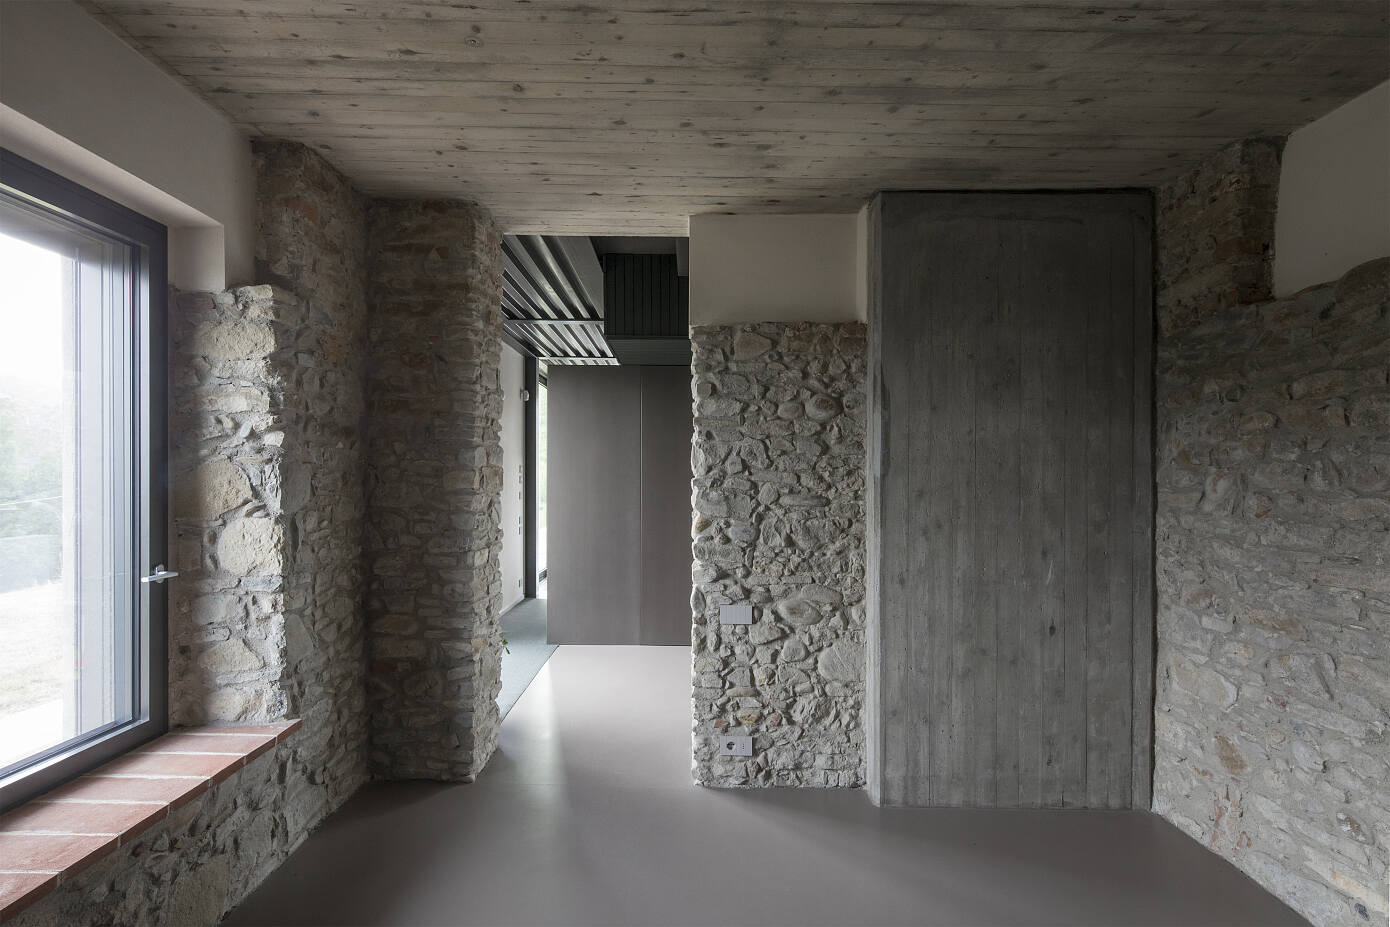 The Hidden-in-plain-sight House by Daniele Baiotto